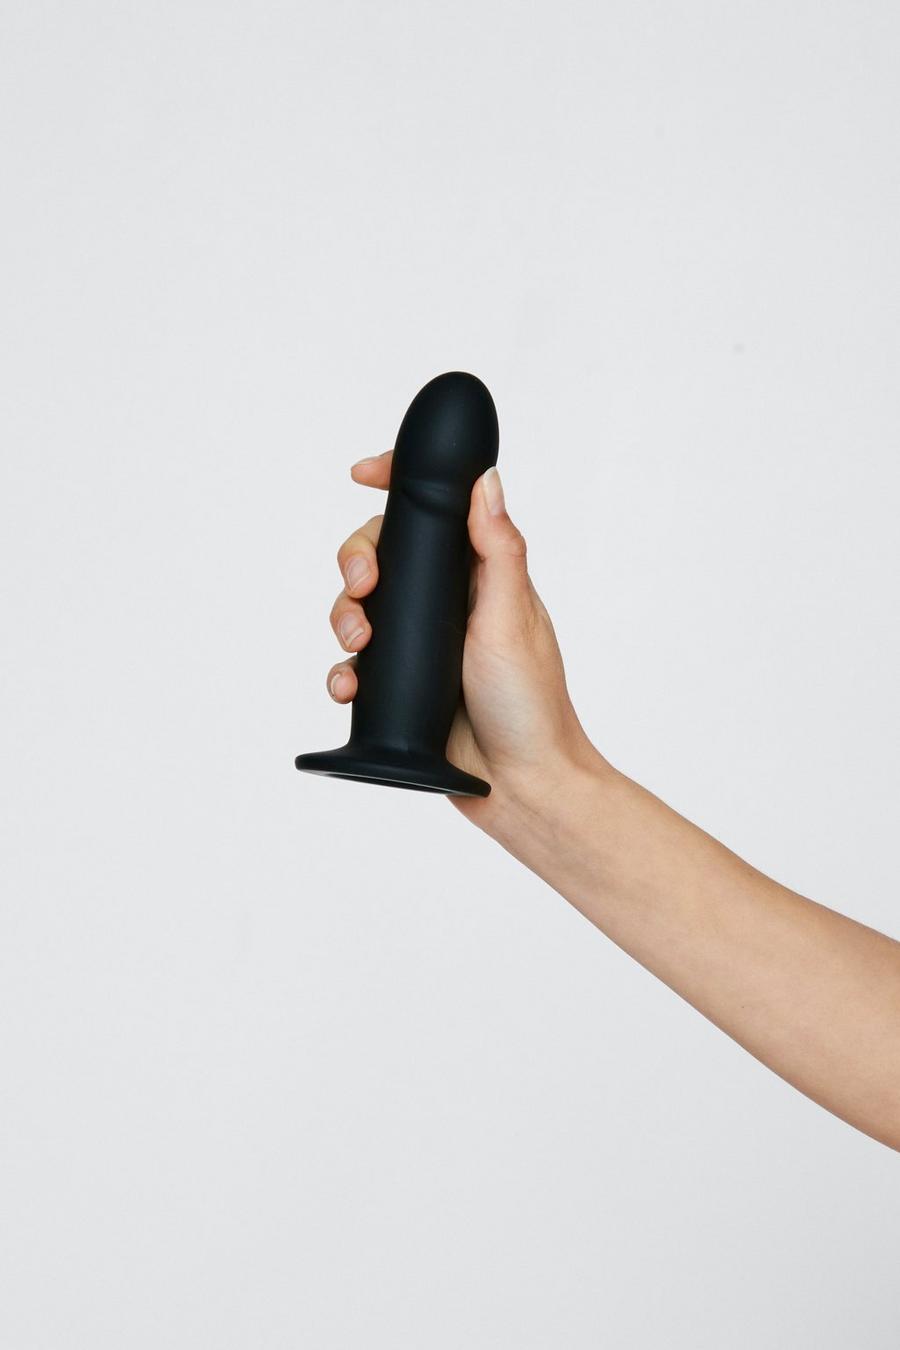 Medium Suction Cup Dildo Sex Toy